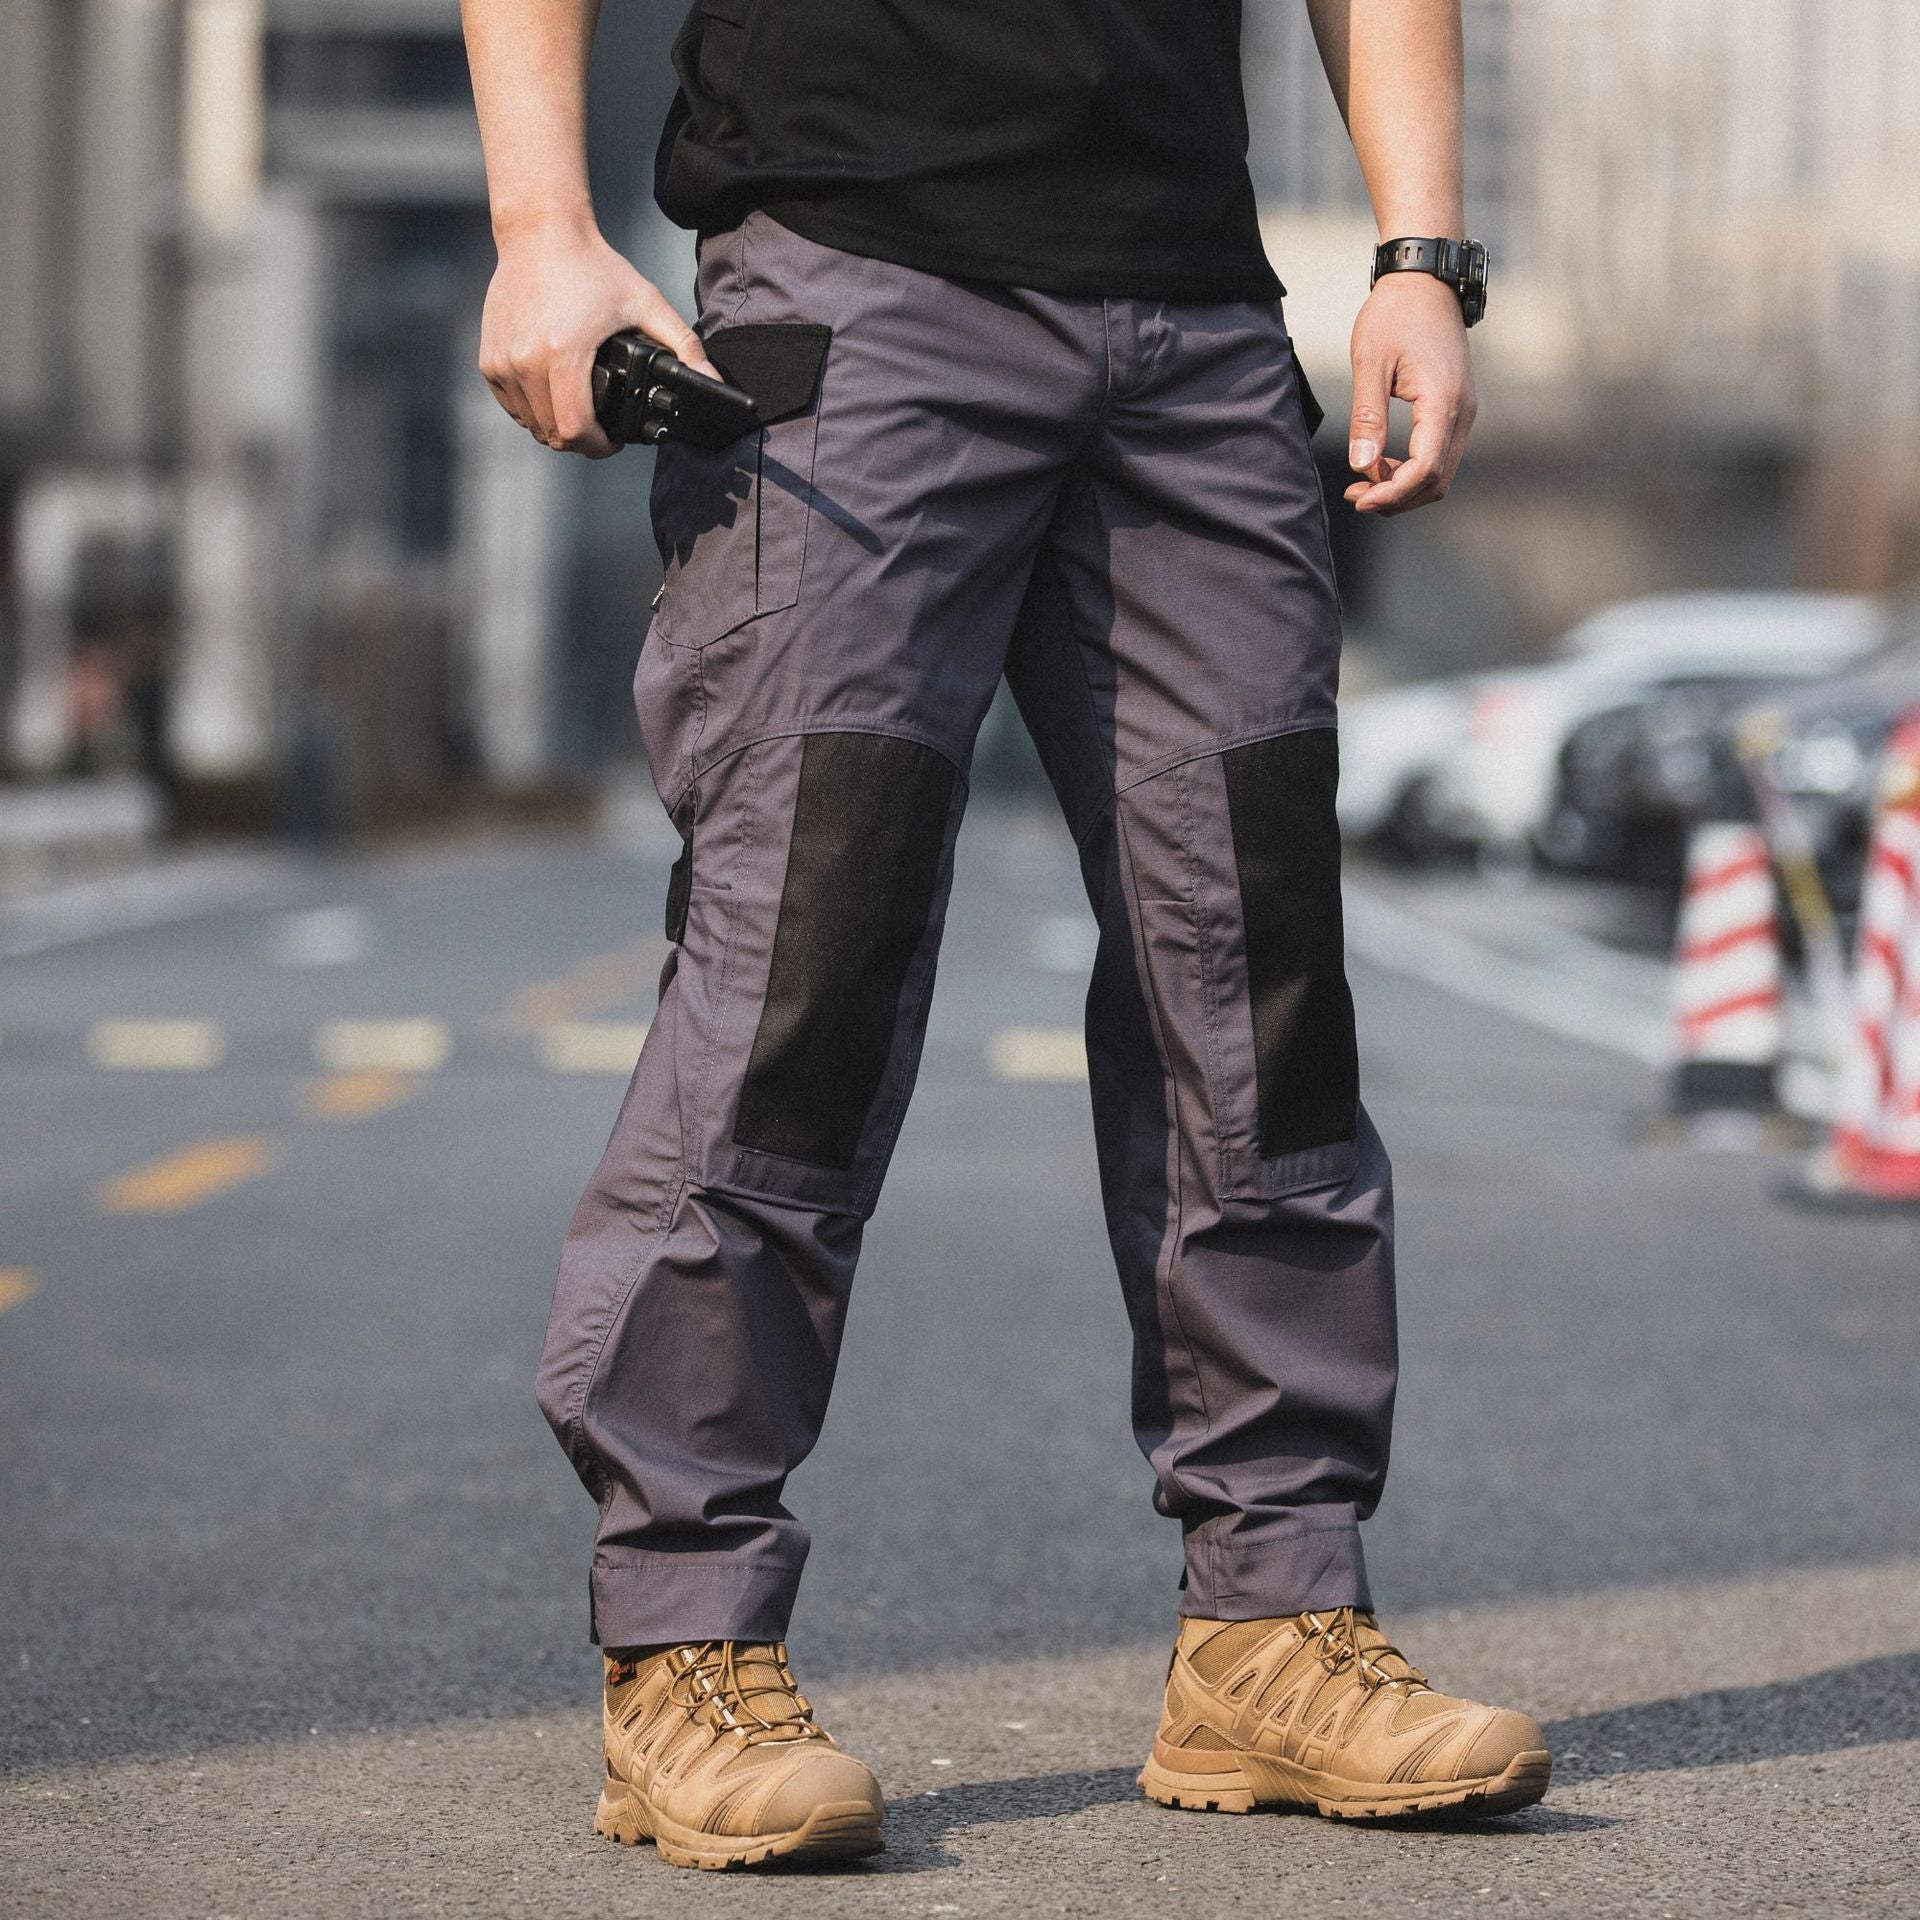 JIUKE Clearance Cargo Pants for Men Lightweight Outdoor Hiking Work Pants  Multi Pocket Assault Pants Flex Stretch Tactical Pants